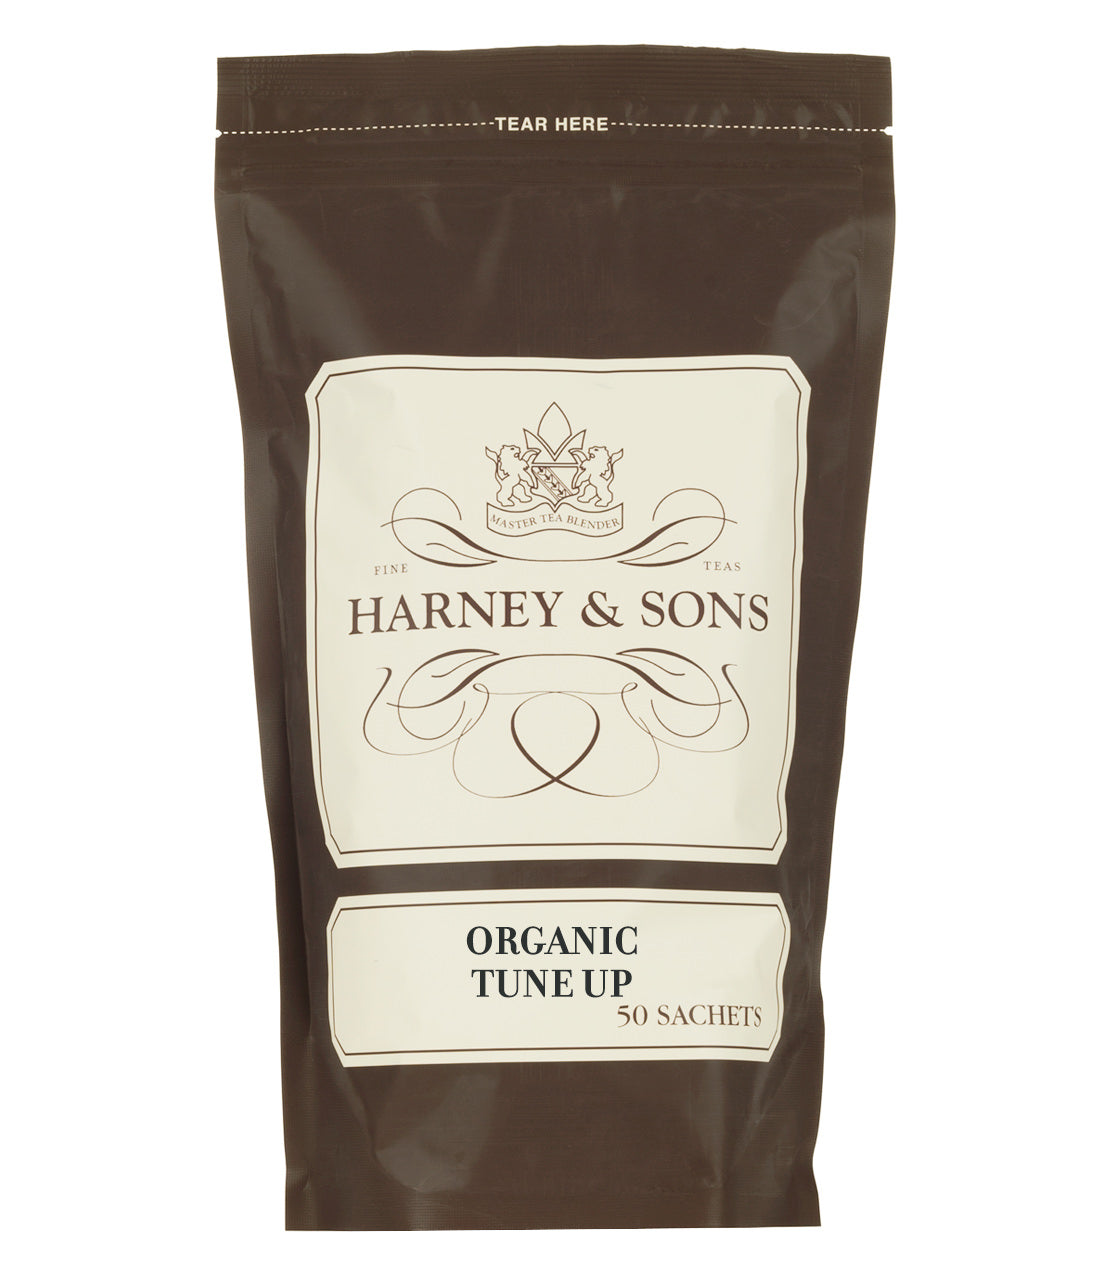 Organic Hibiscus Ginger -  Tune Up - Sachet Bag of 50 sachets - Harney & Sons Fine Teas